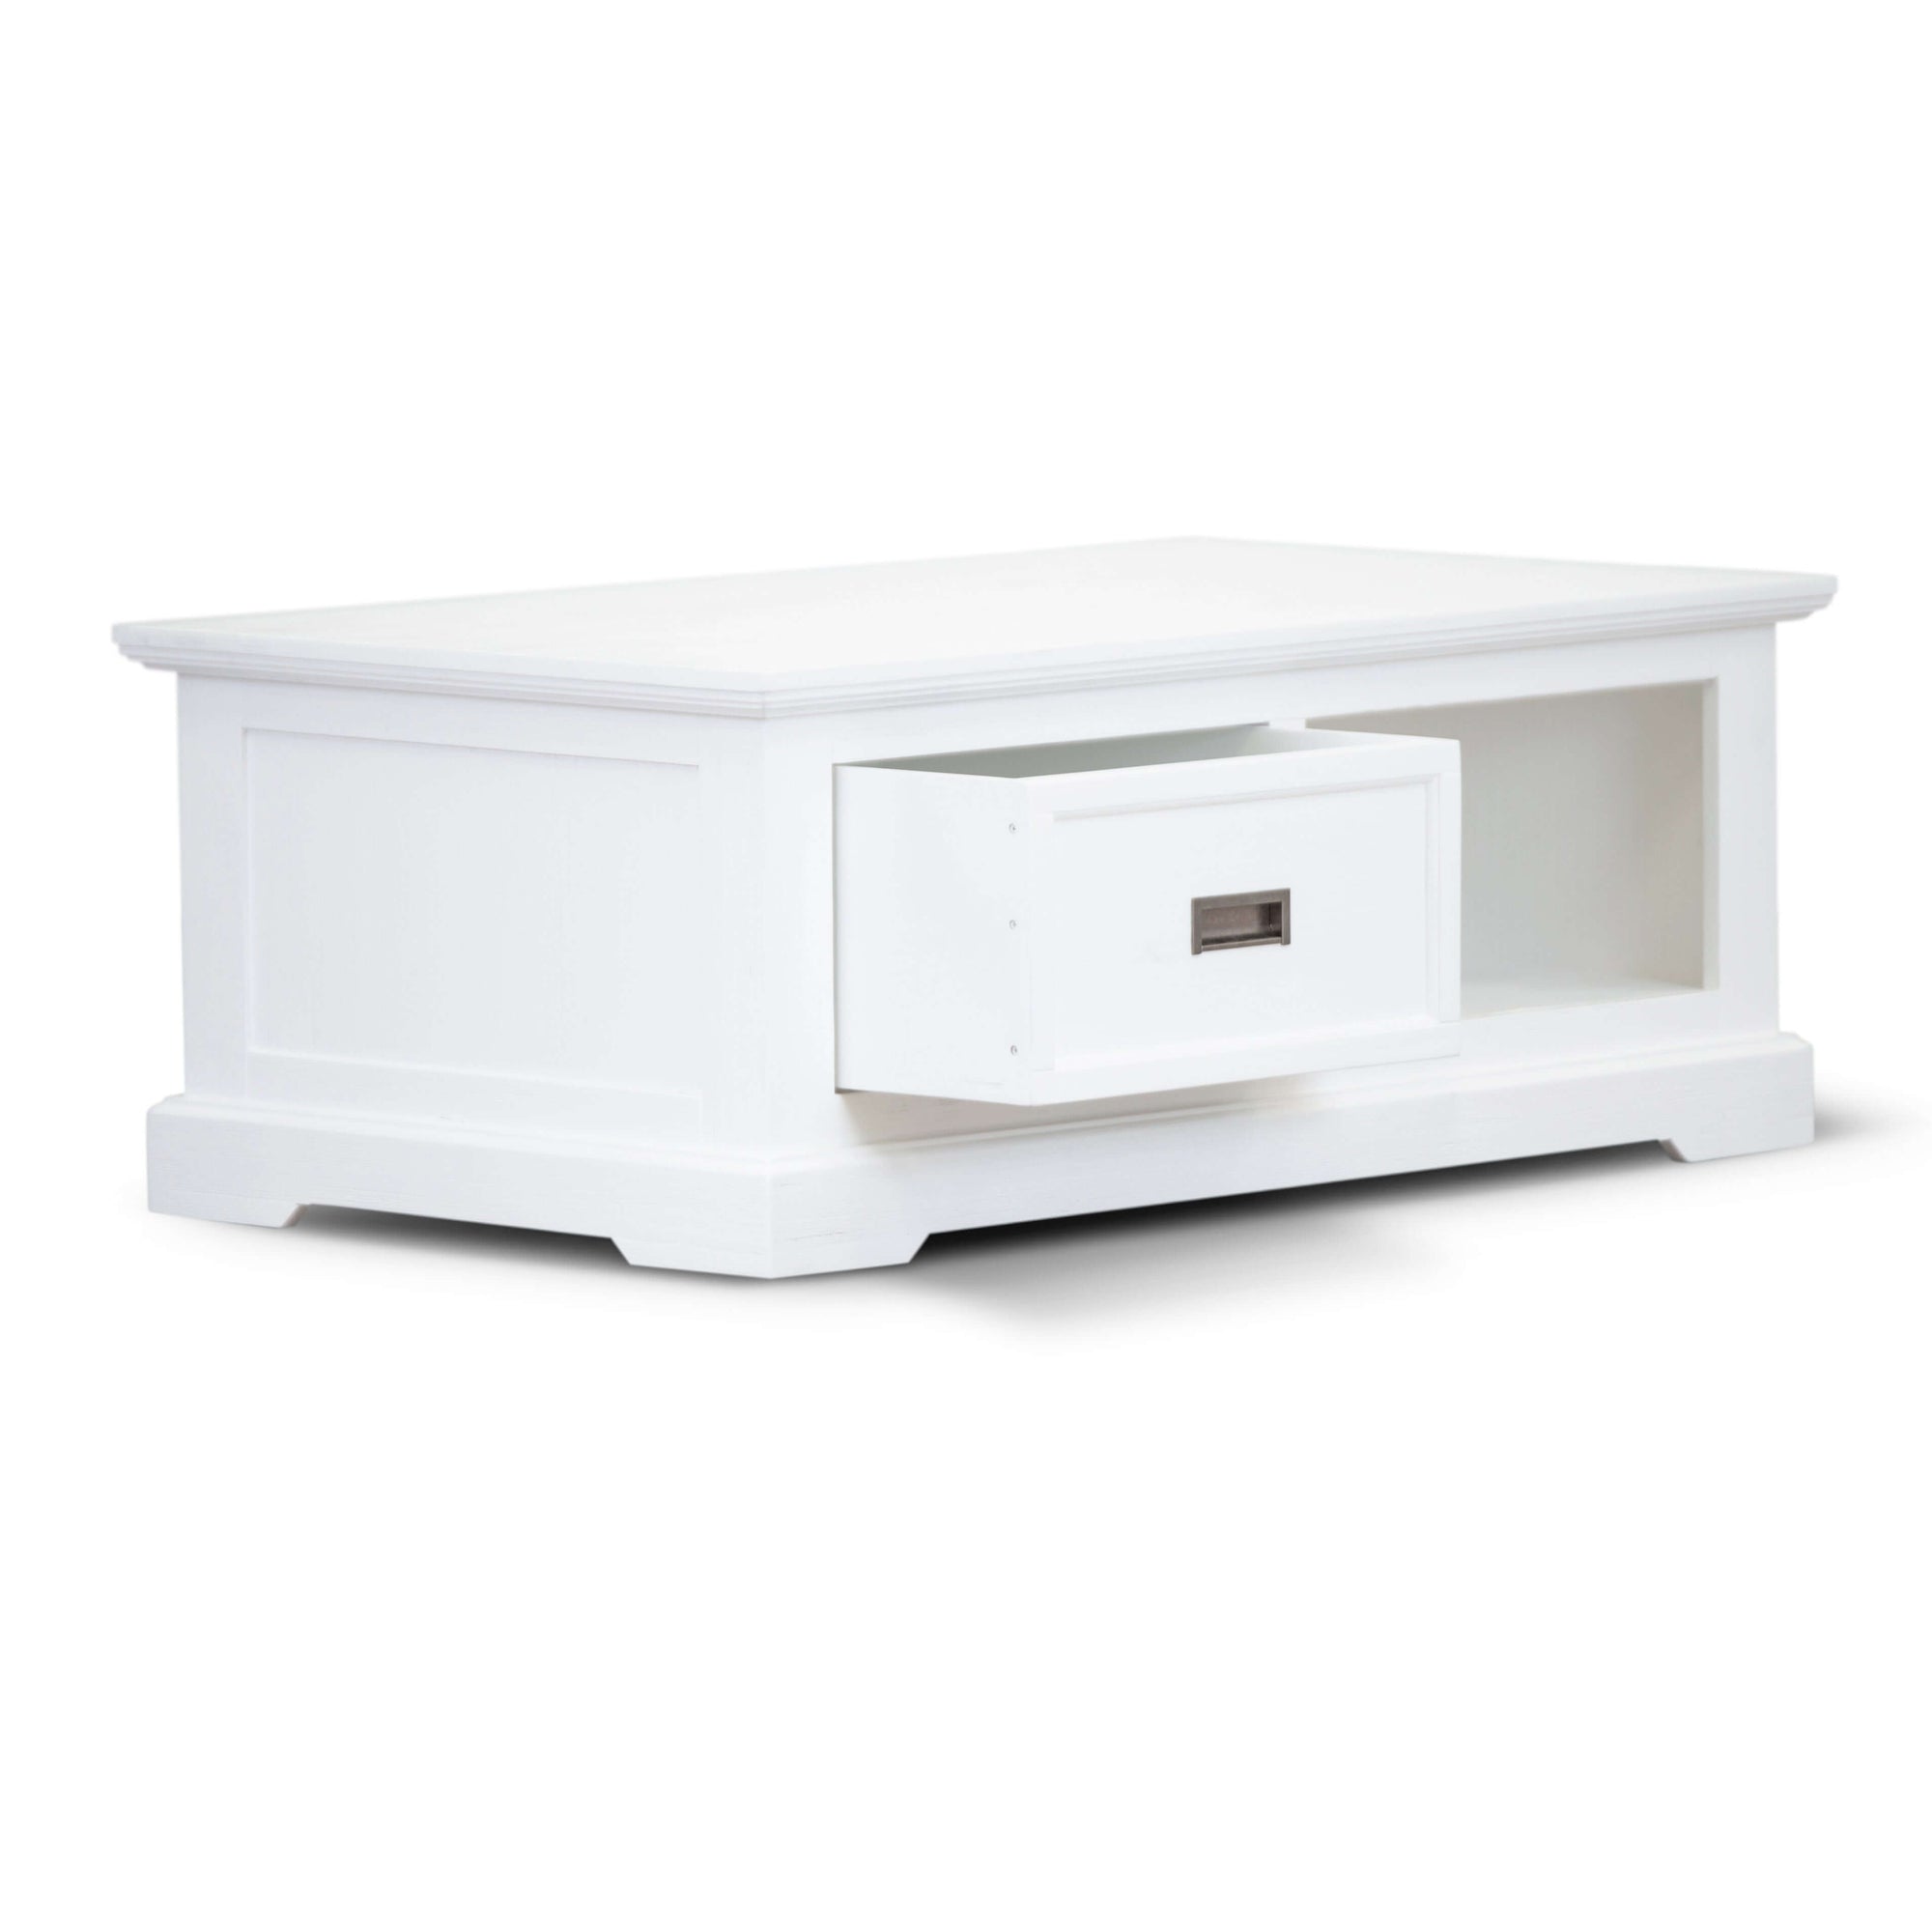 Laelia Coffee Table 120cm Solid Acacia Timber Wood Coastal Furniture - White-Upinteriors